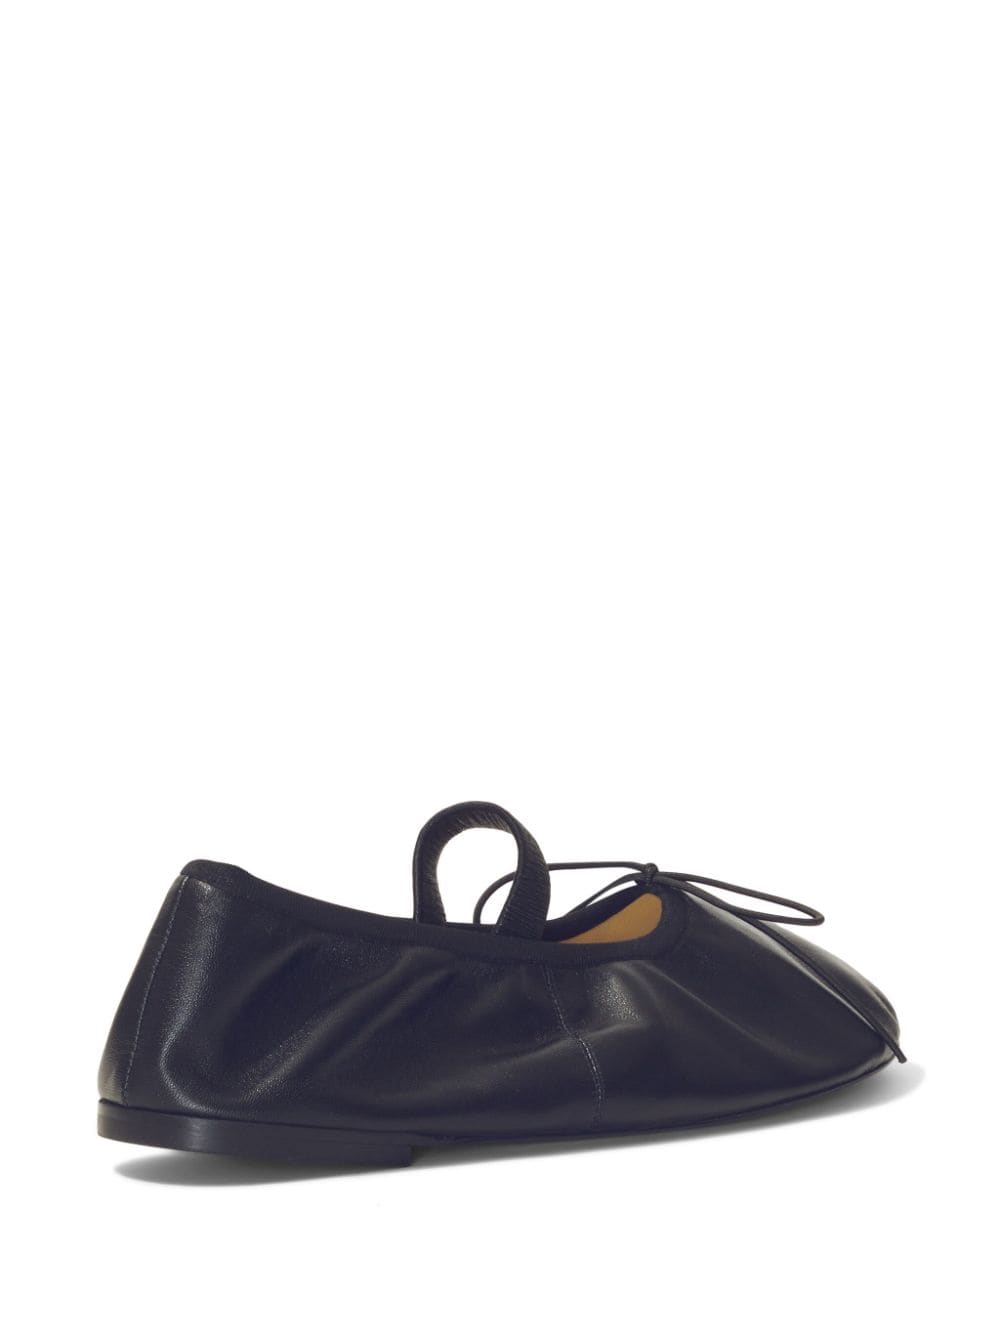 Shop Proenza Schouler Glove Mary Jane Ballerina Shoes In Black